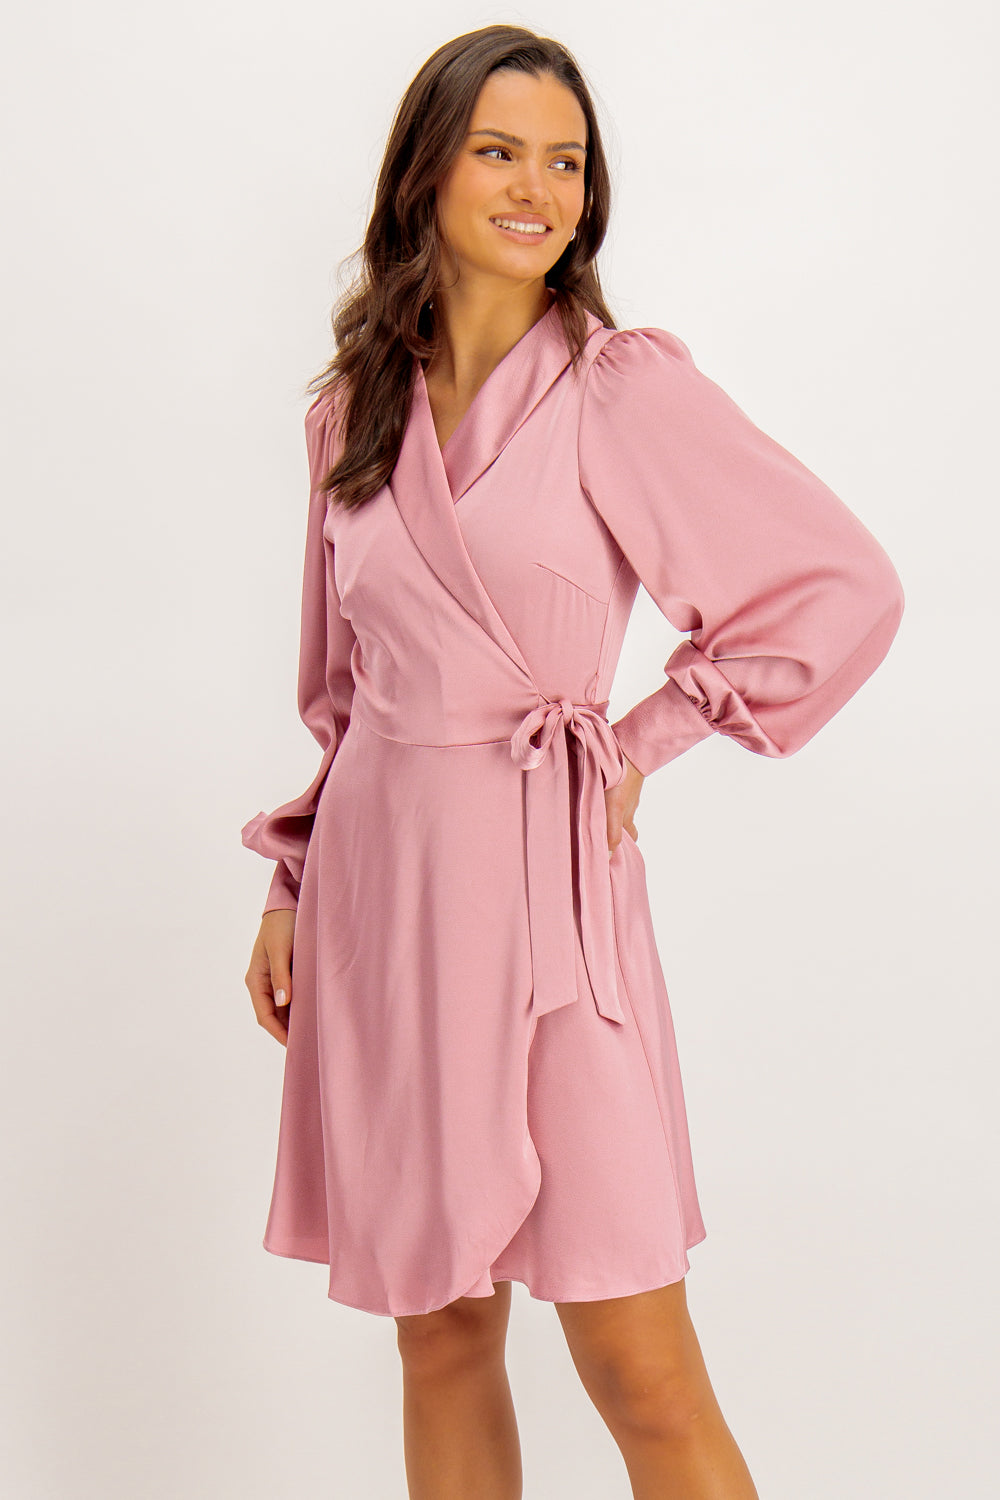 Enna Ravenna Pink Short Wrap Dress